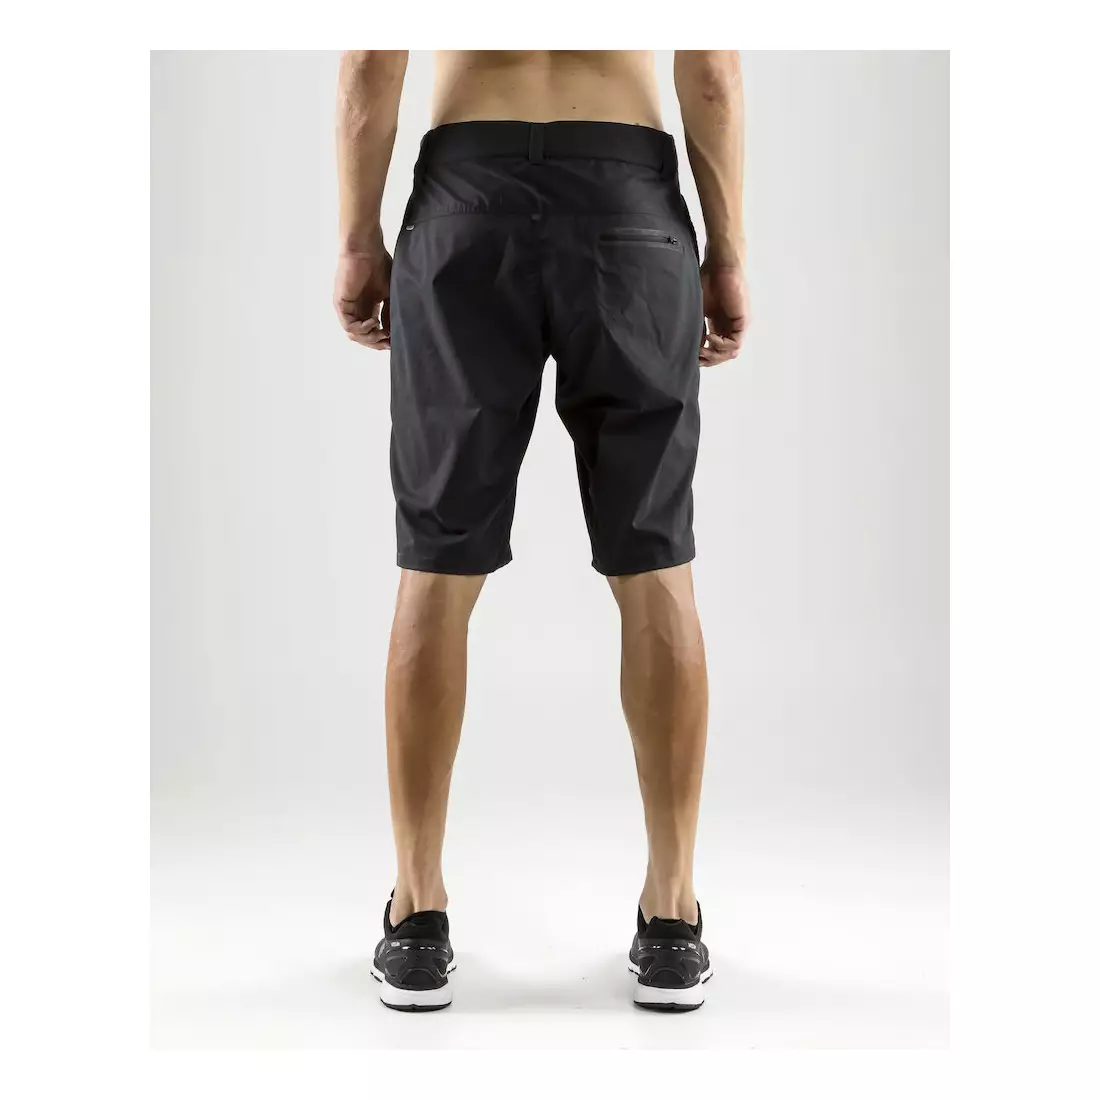 CRAFT Ride Shorts 1905013-9999 - men's cycling shorts, black